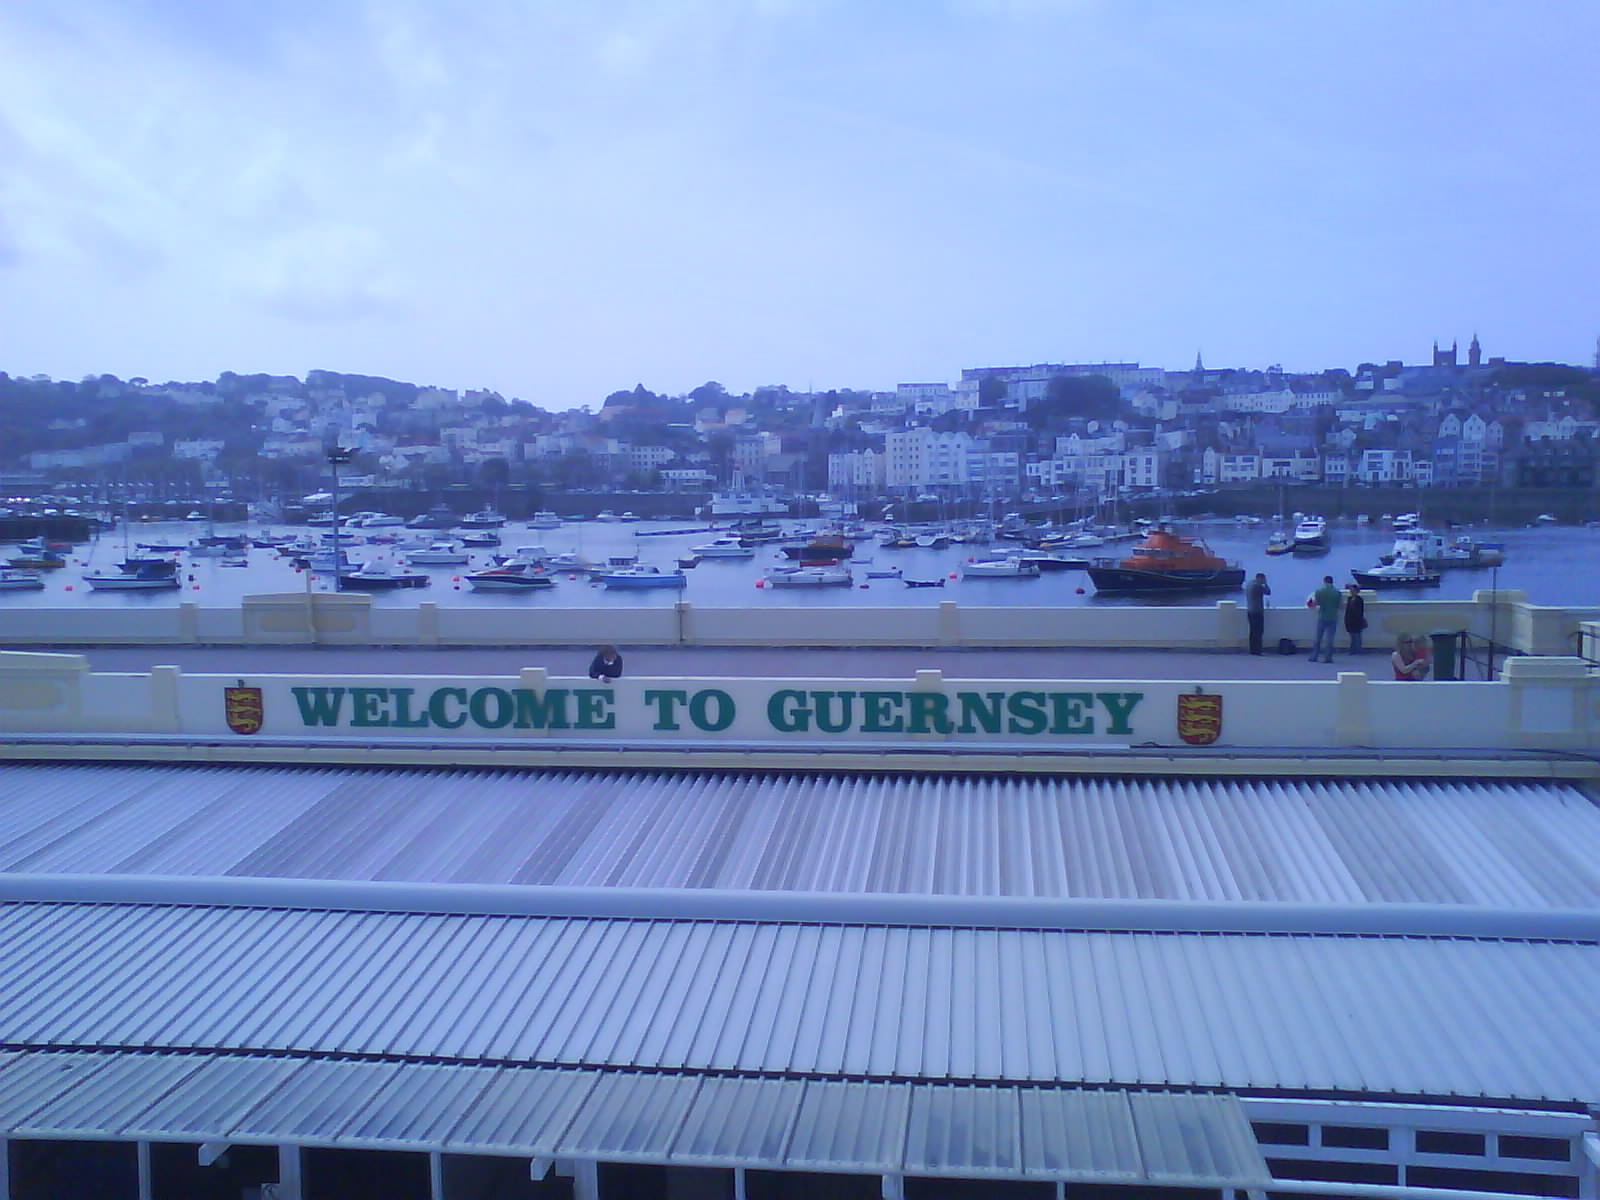 Jonny Blair arrives in Guernsey with a spear gun!